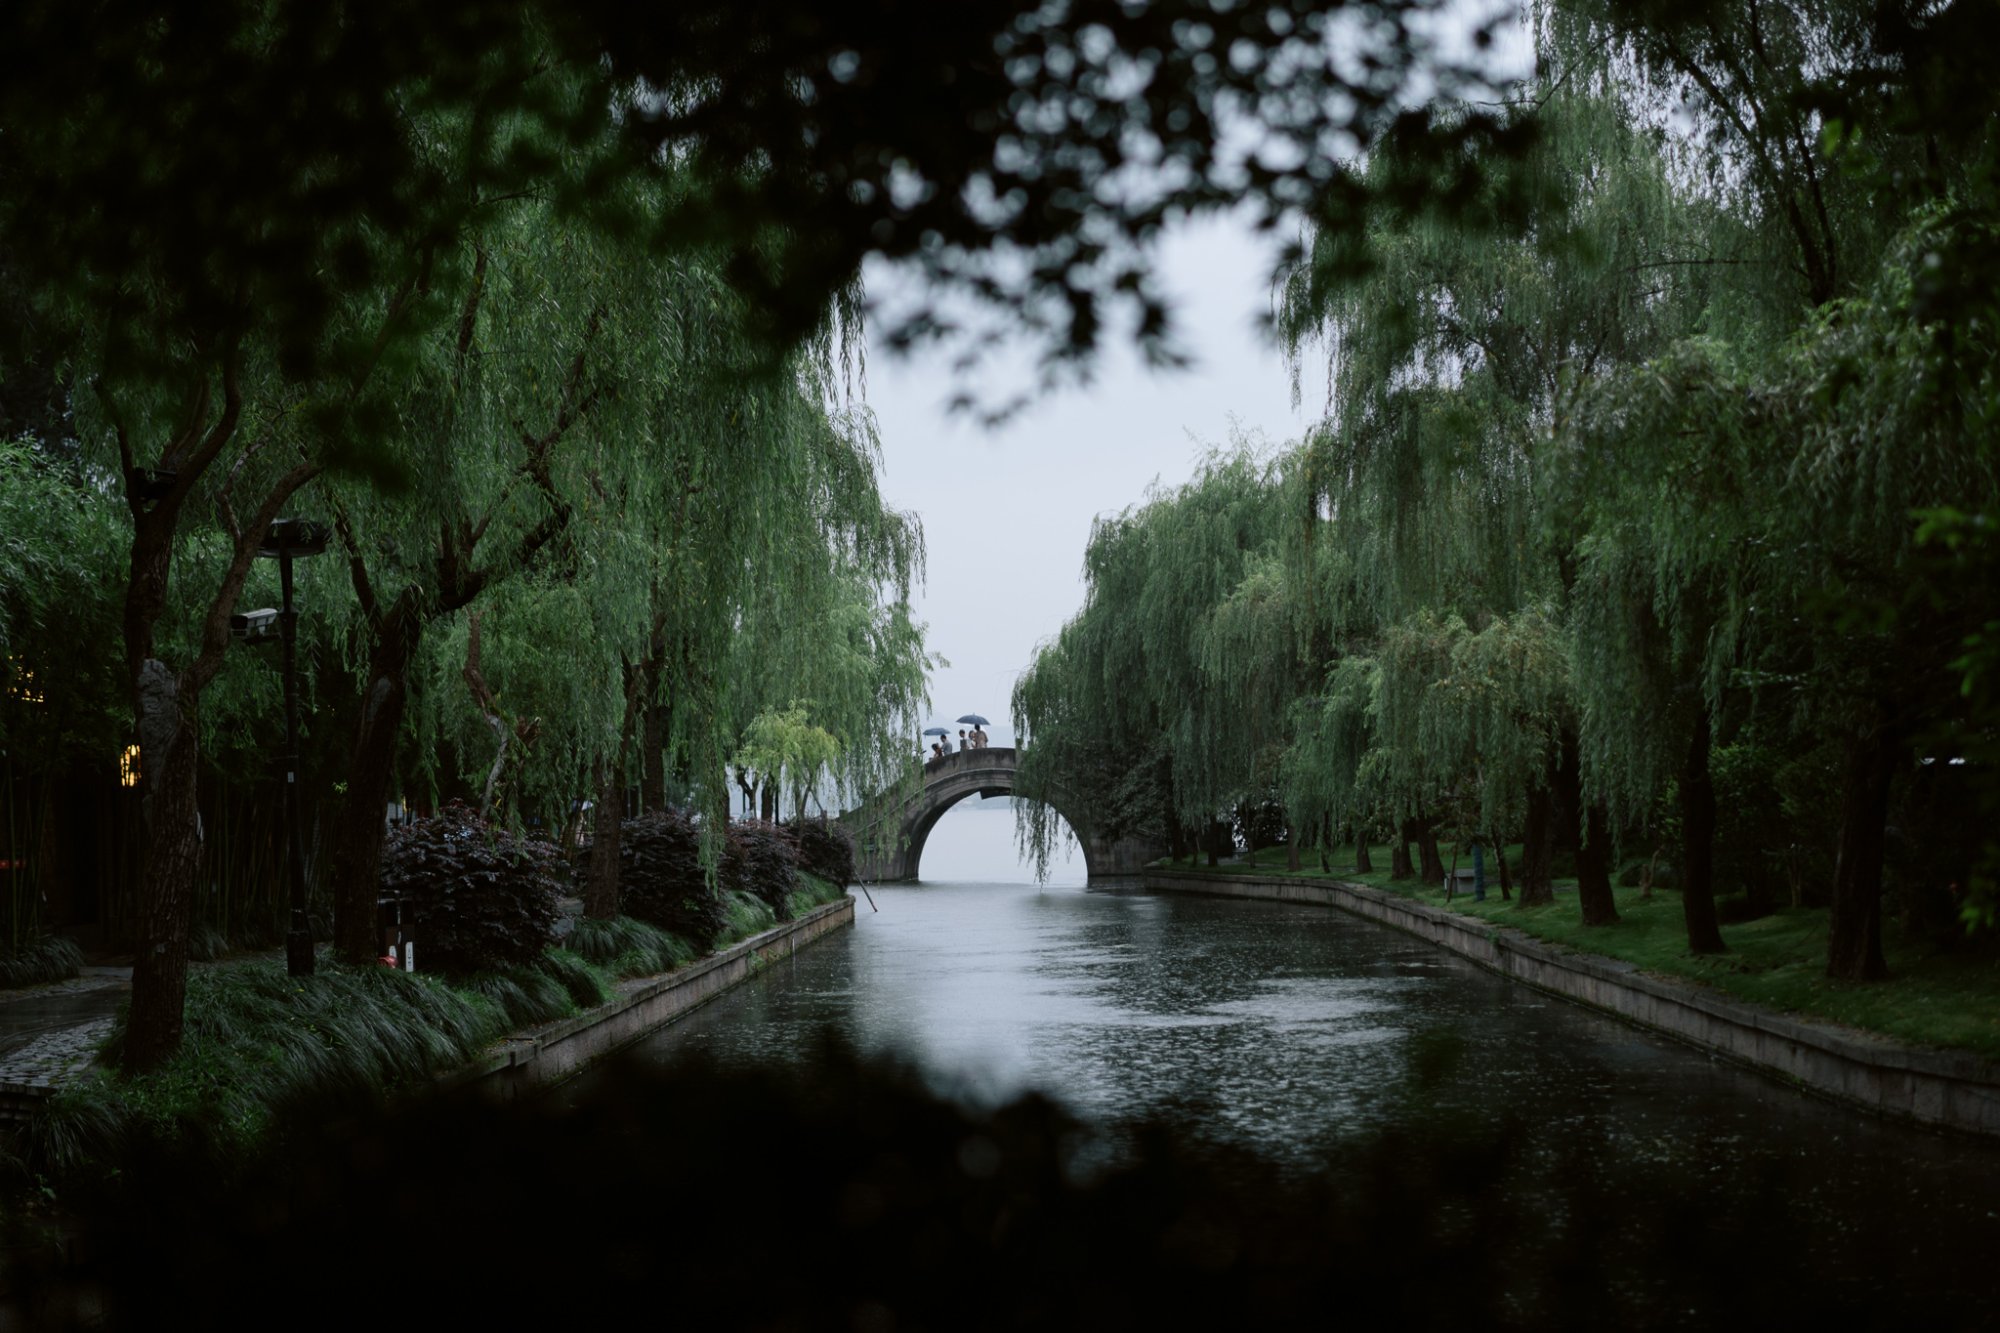 Shanghai &#038; Hangzhou: Revisit The Beautiful China